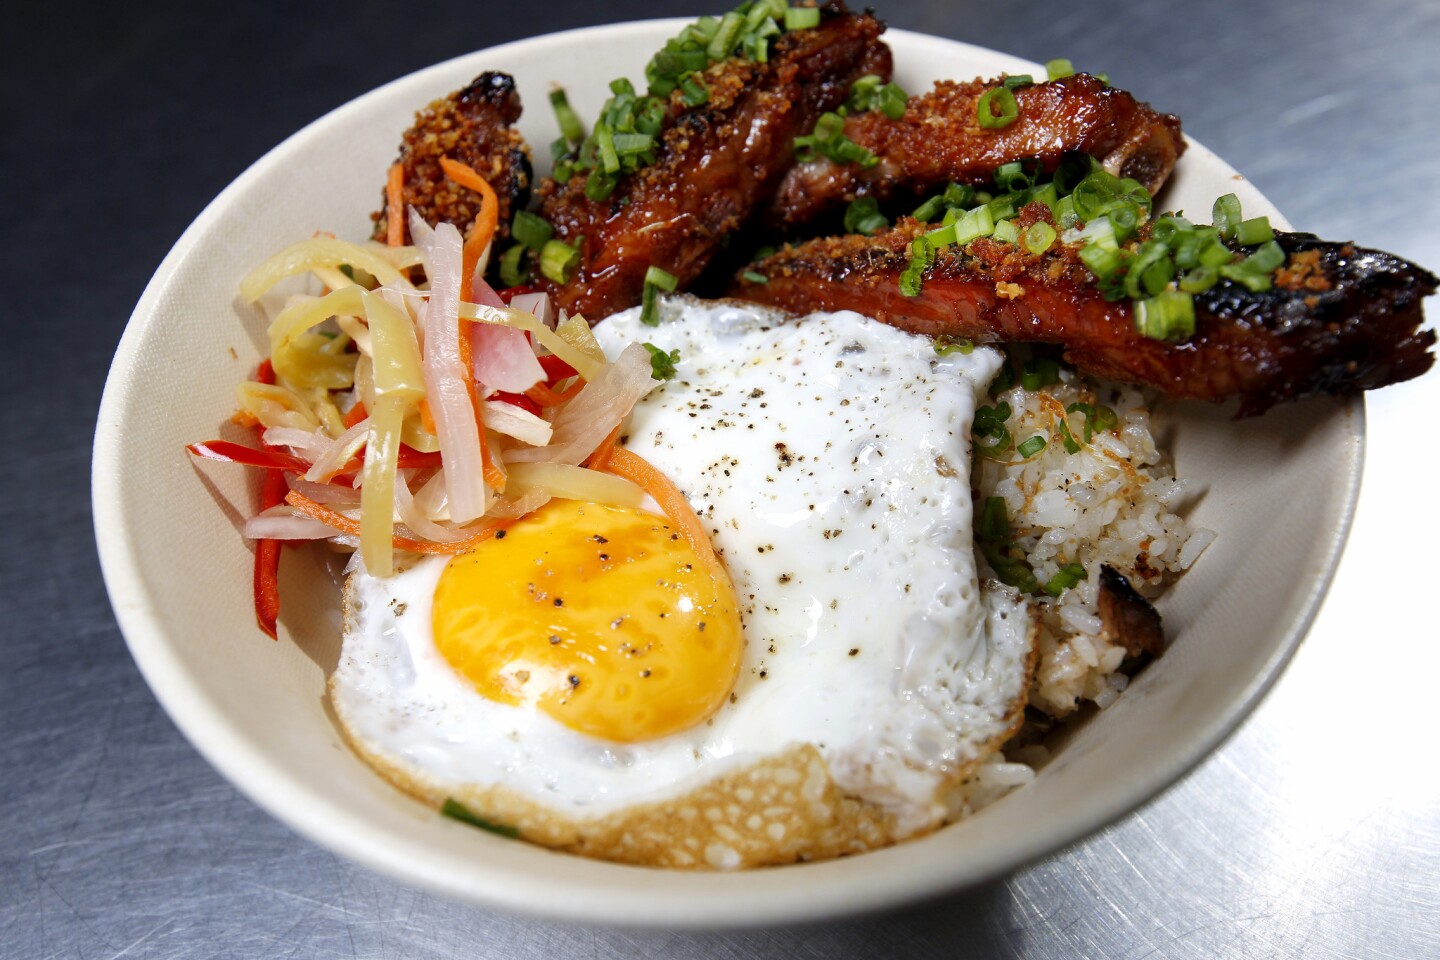 The Pinoy BBQ at Sari Sari Store in Grand Central Market features garlic pork ribs, garlic rice, apsara and fried egg.